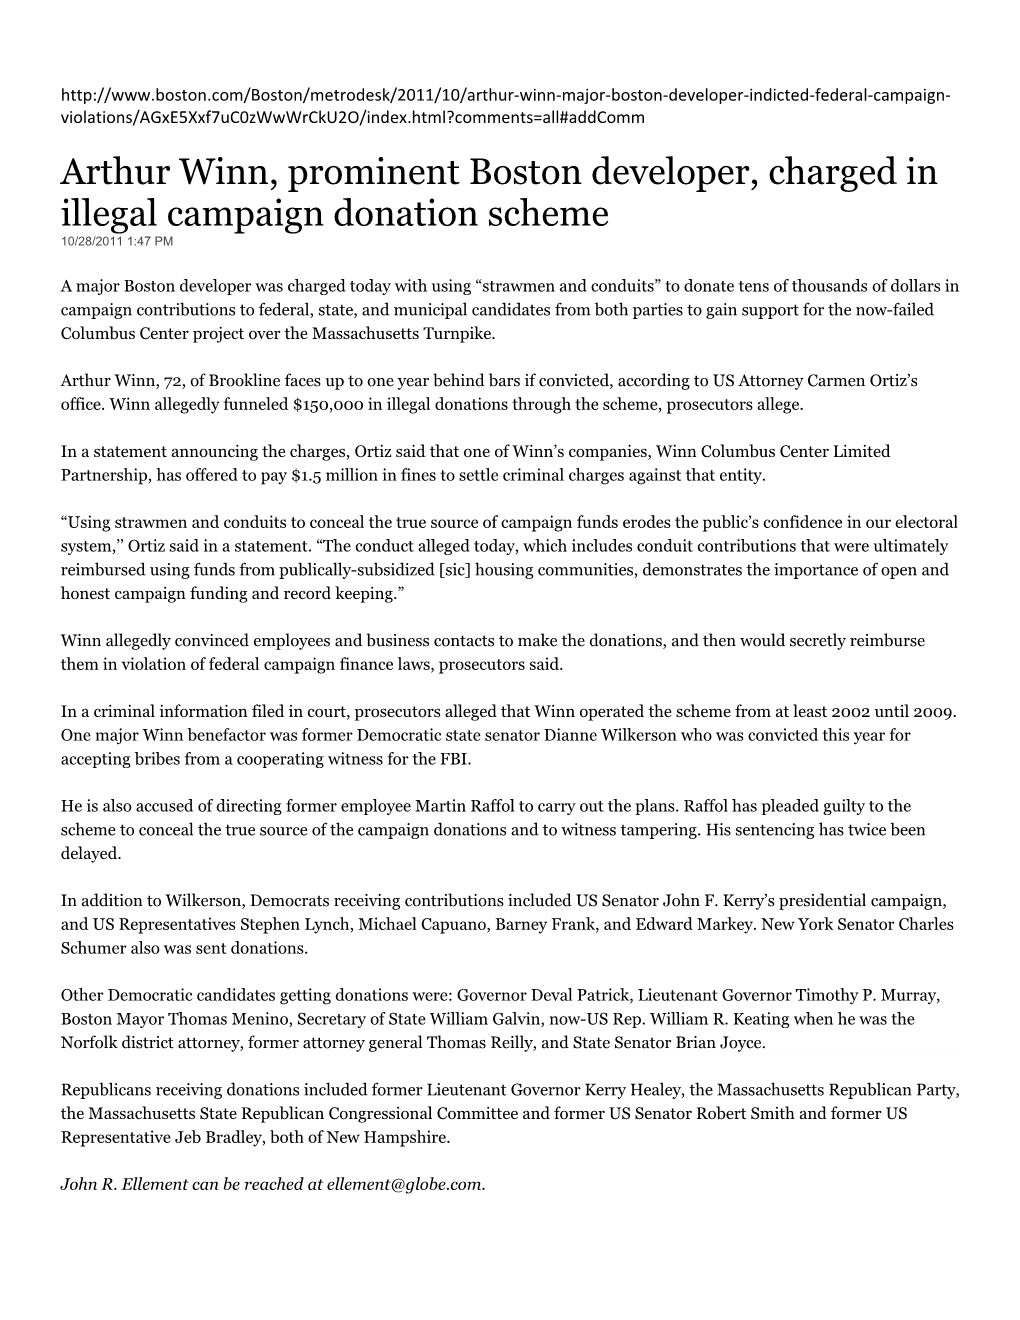 Arthur Winn, Prominent Boston Developer, Charged in Illegal Campaign Donation Scheme